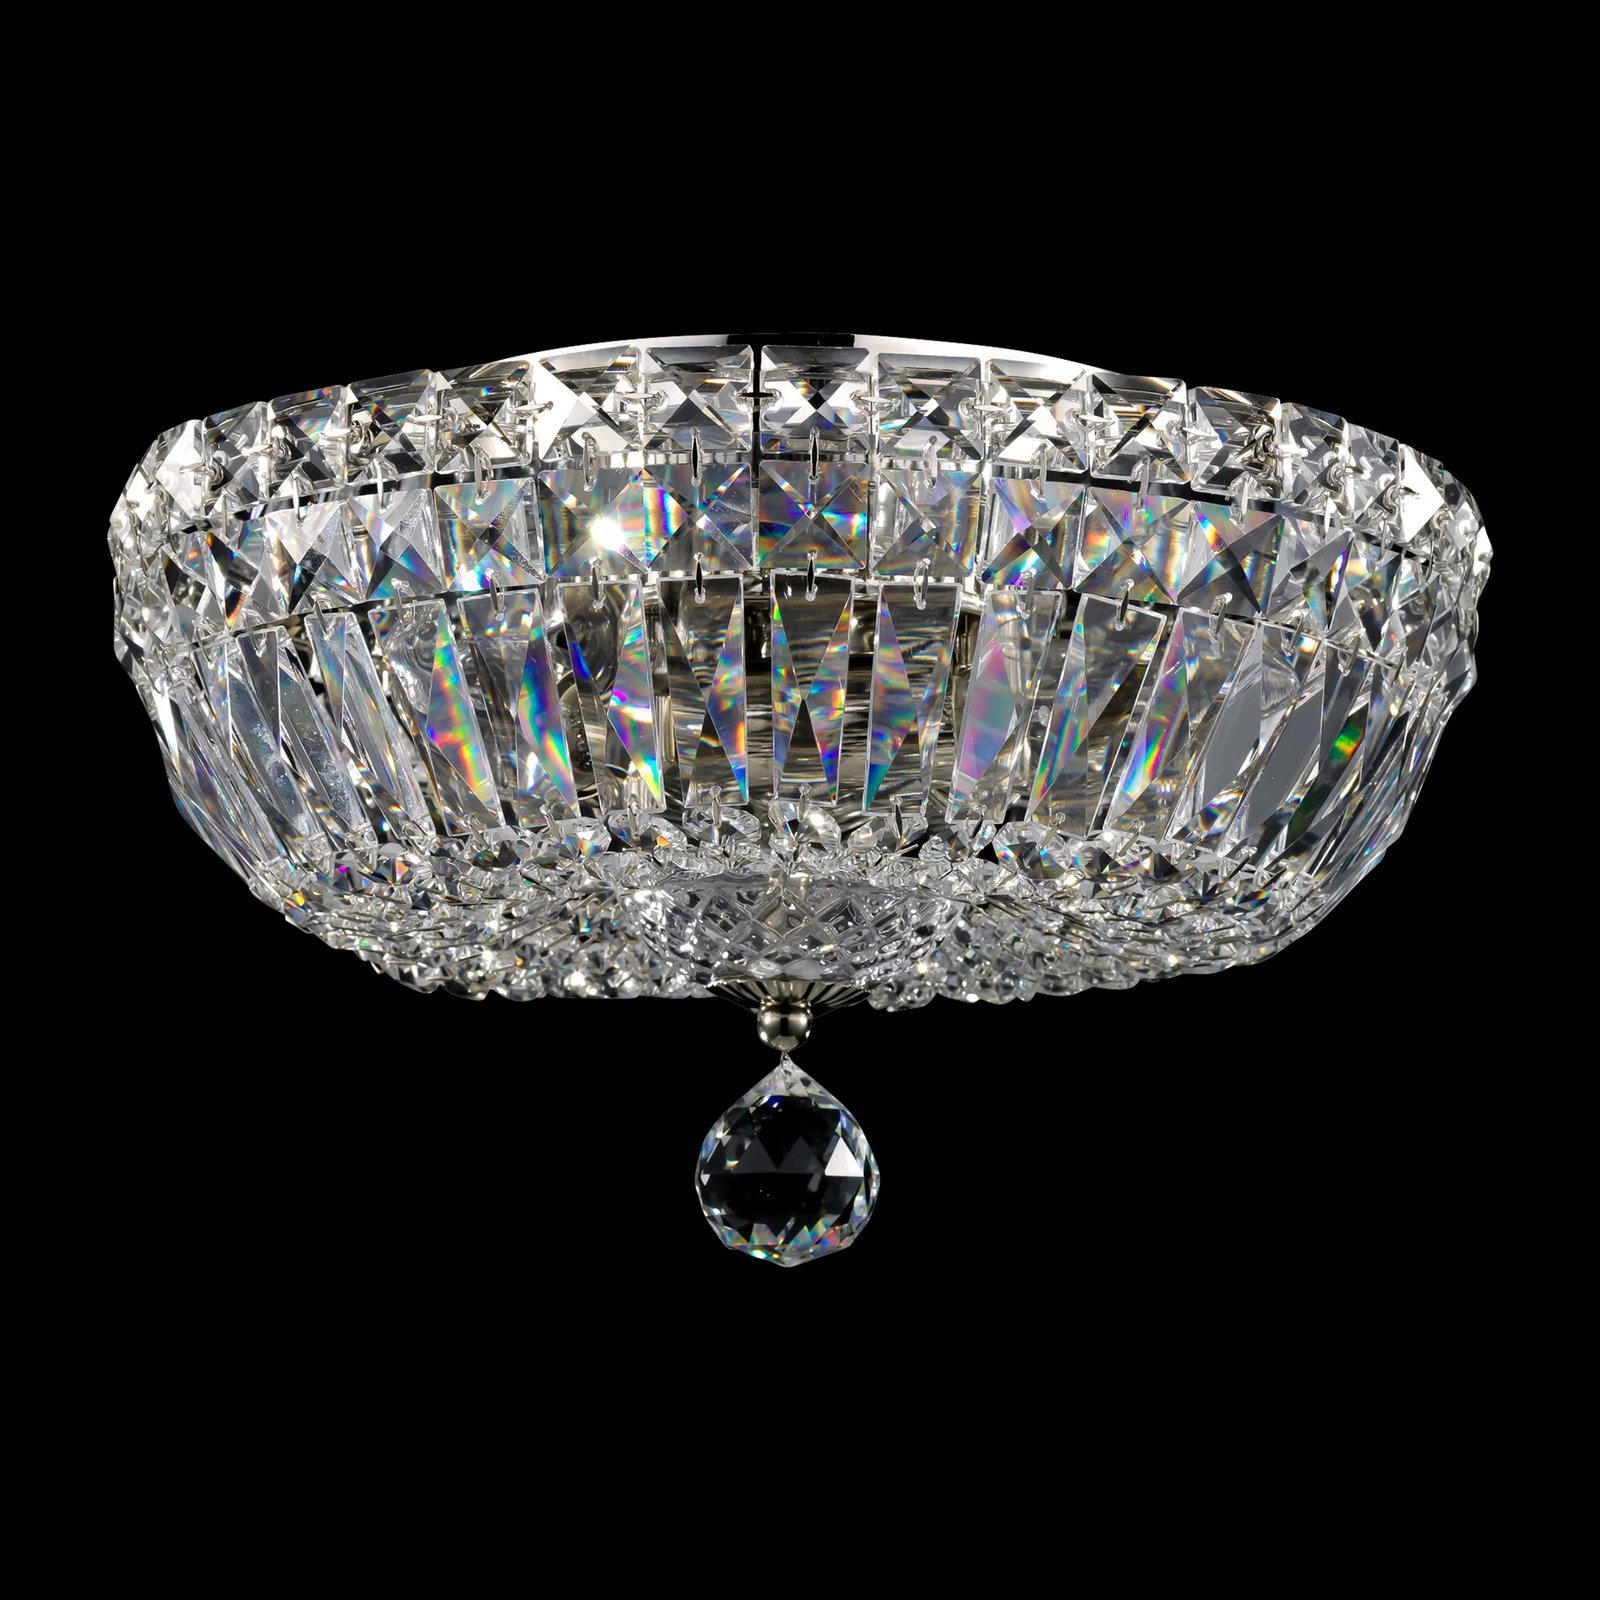 Maytoni Basfor ceiling light round, crystals